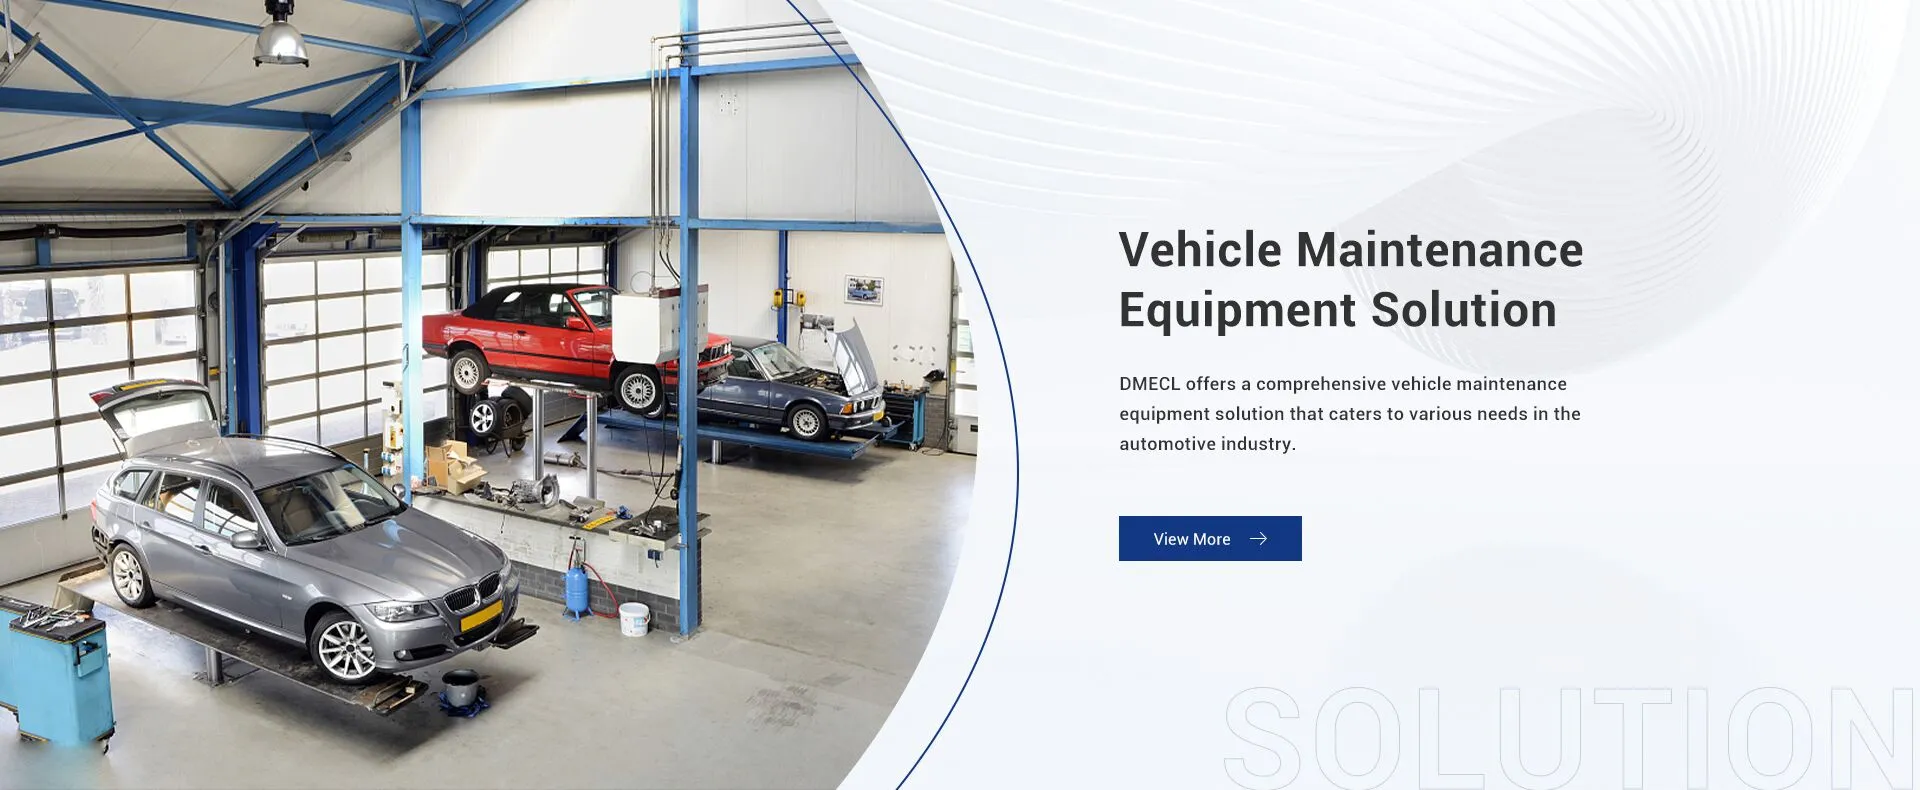 Vehicle Maintenance Equipment Solution